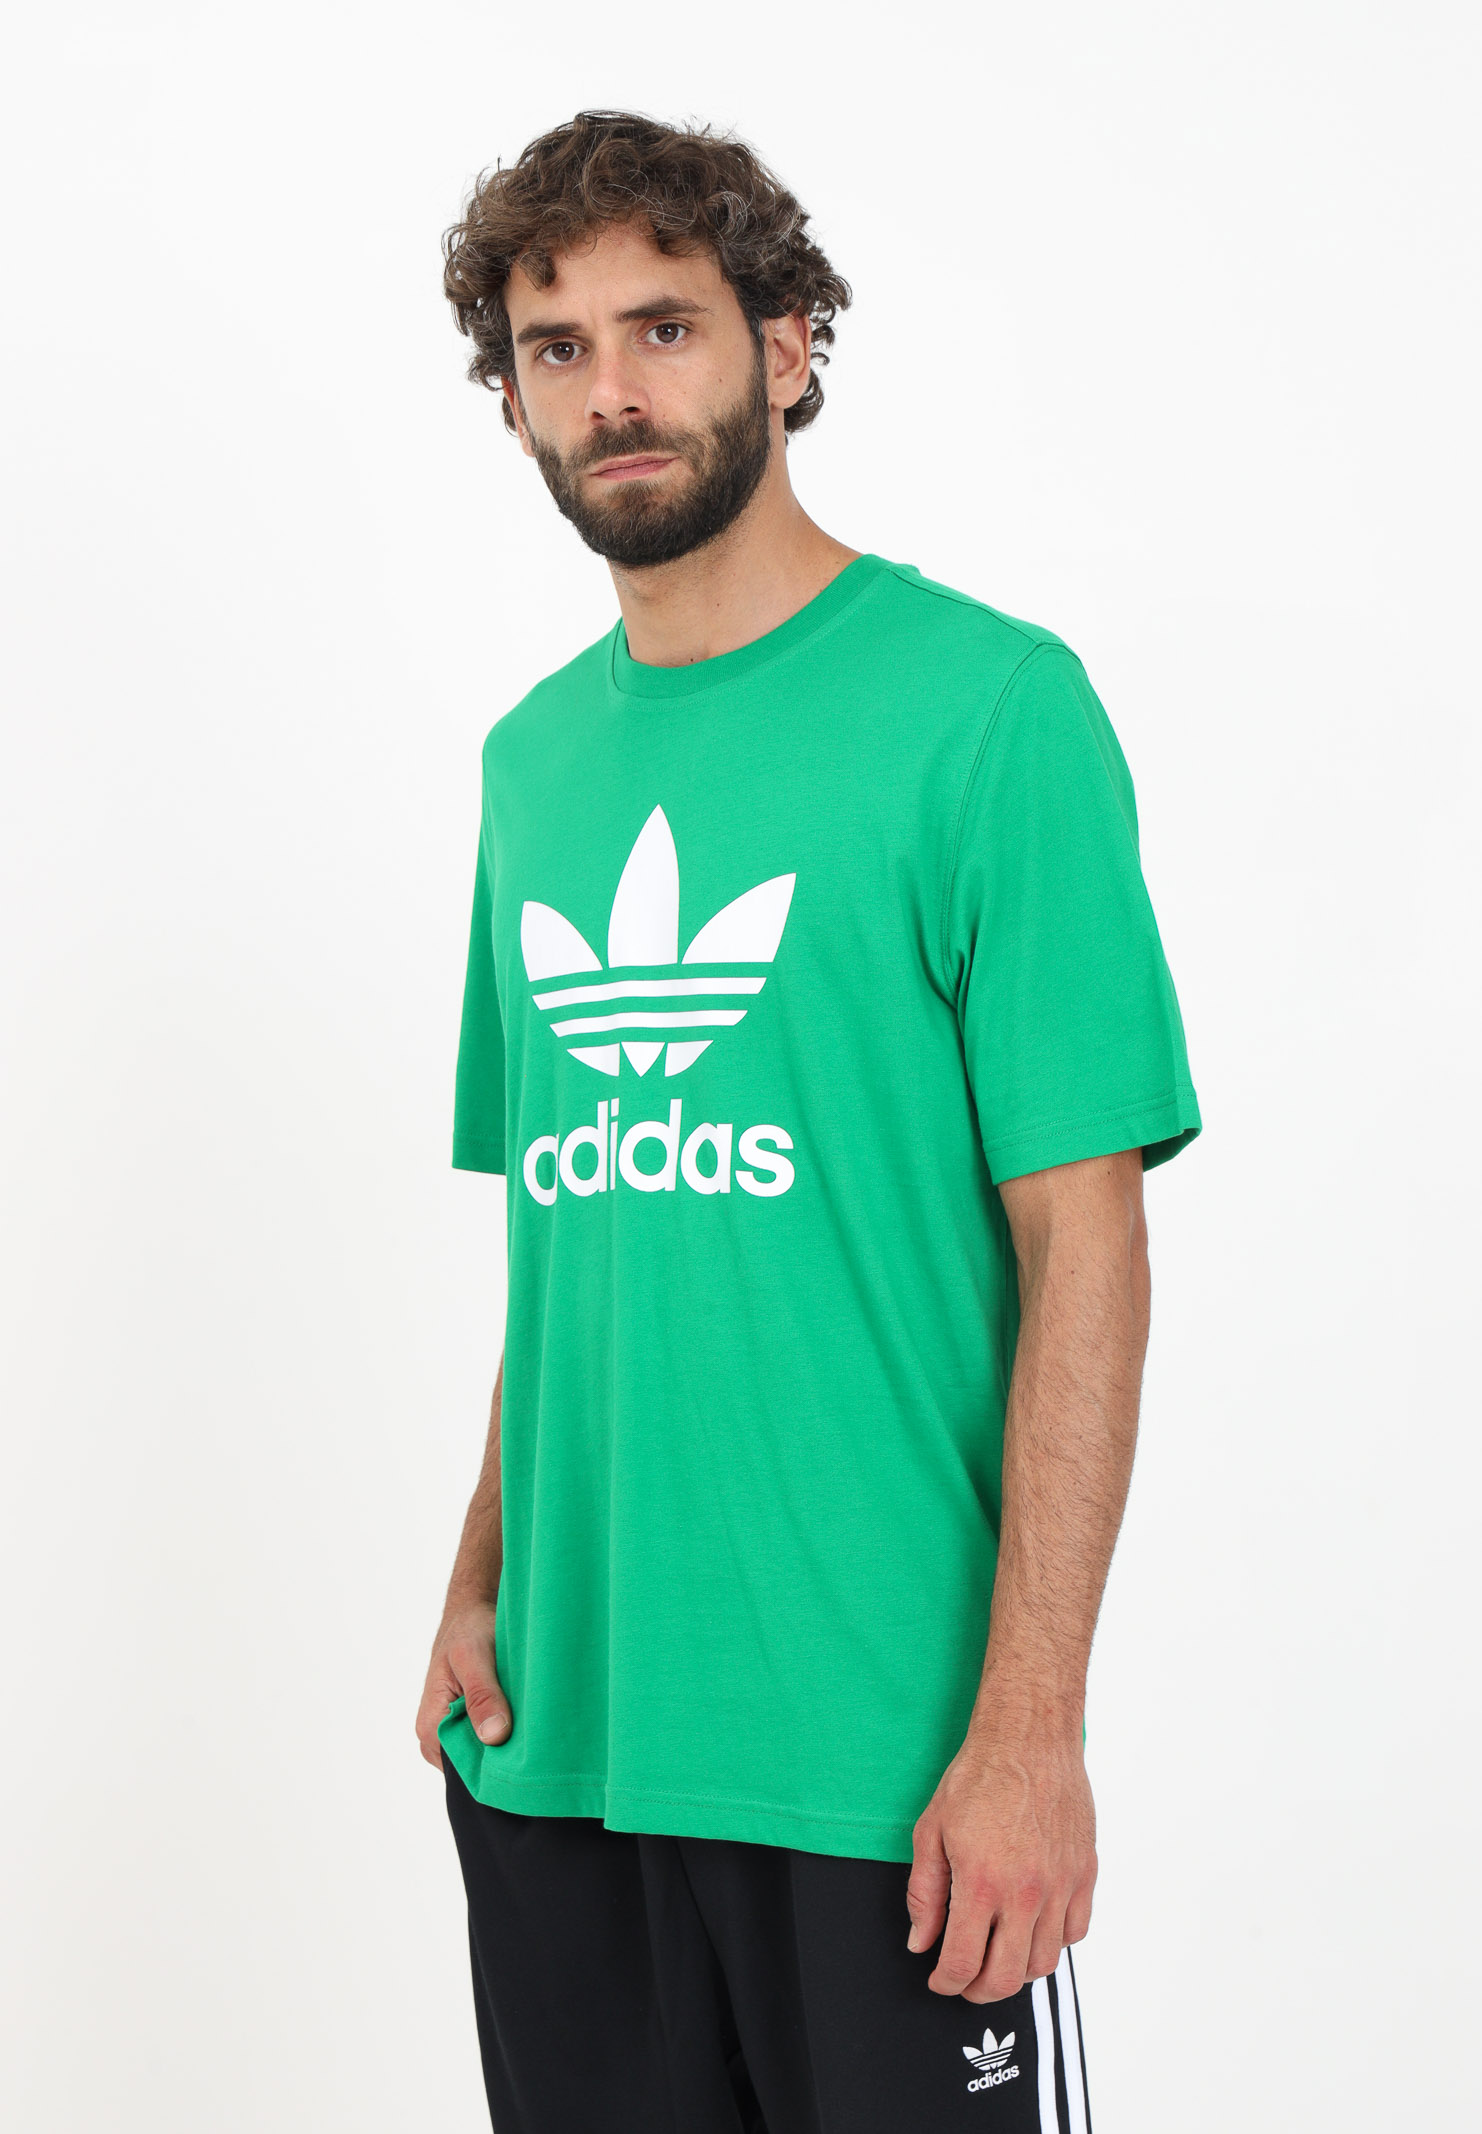 - Pavidas Adicolor ORIGINALS Classics Trefoil green - t-shirt men\'s ADIDAS